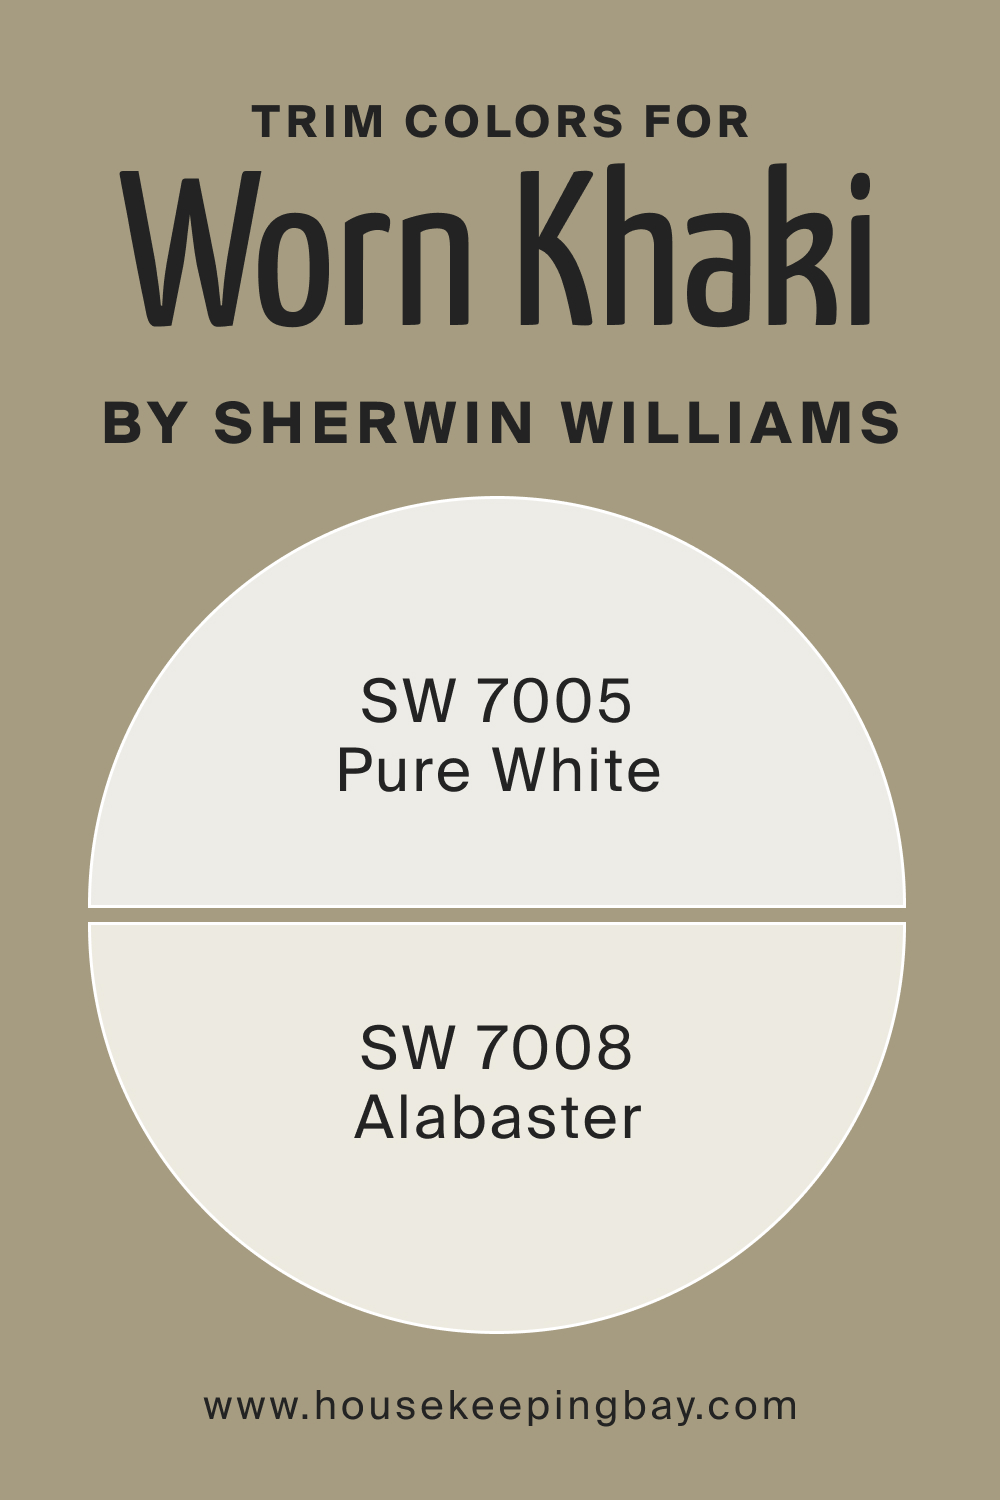 Trim Colors of SW 9527 Worn Khaki by Sherwin Williams